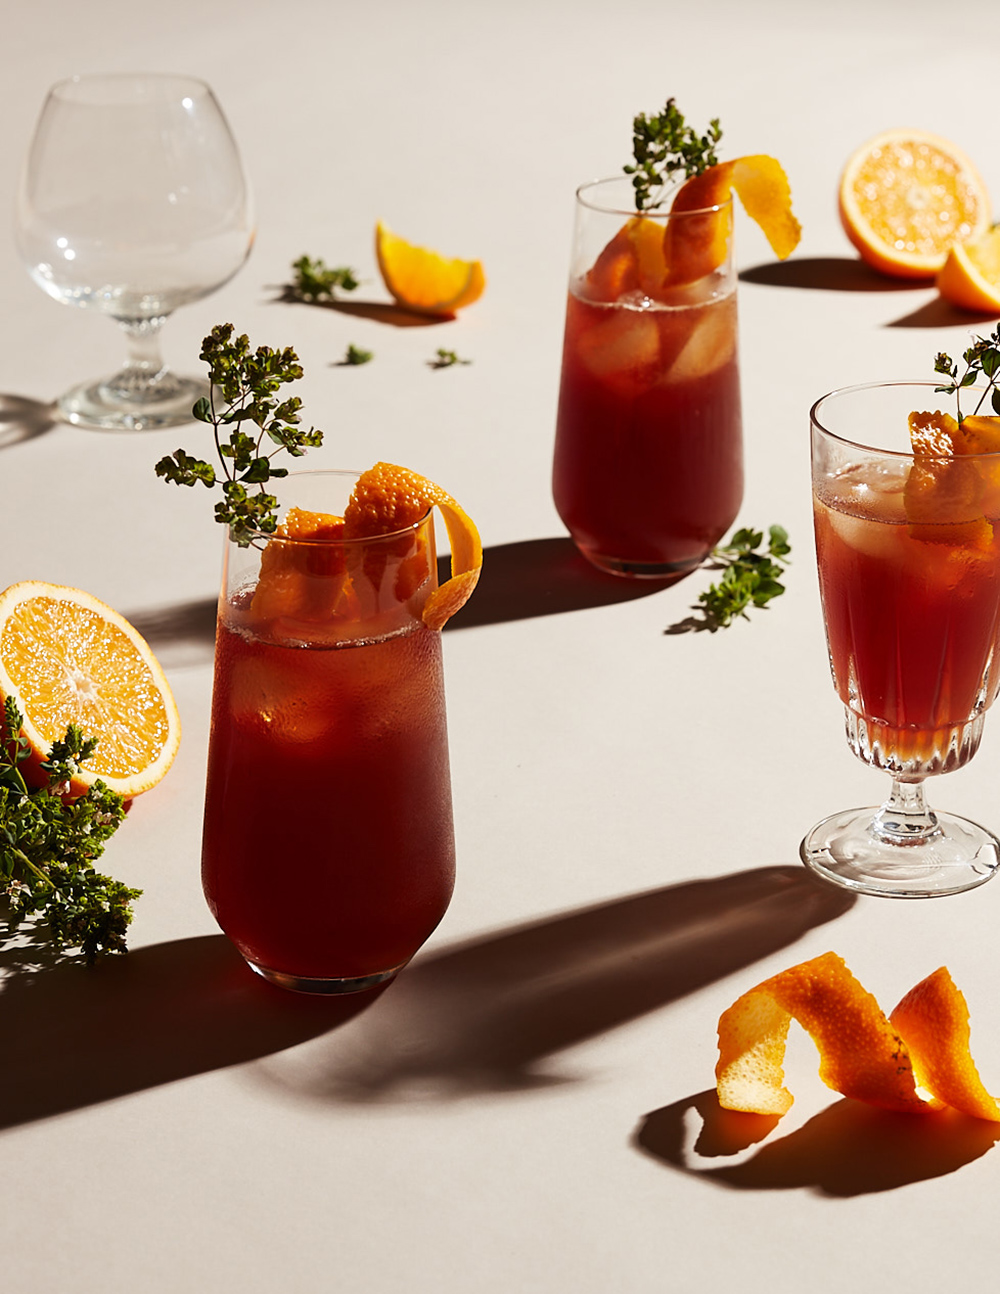 orange-oregano-negroni-cocktail-drinks-styling-prop-stylist-lifestyle-artdirector-creative-lauren-becker.jpg